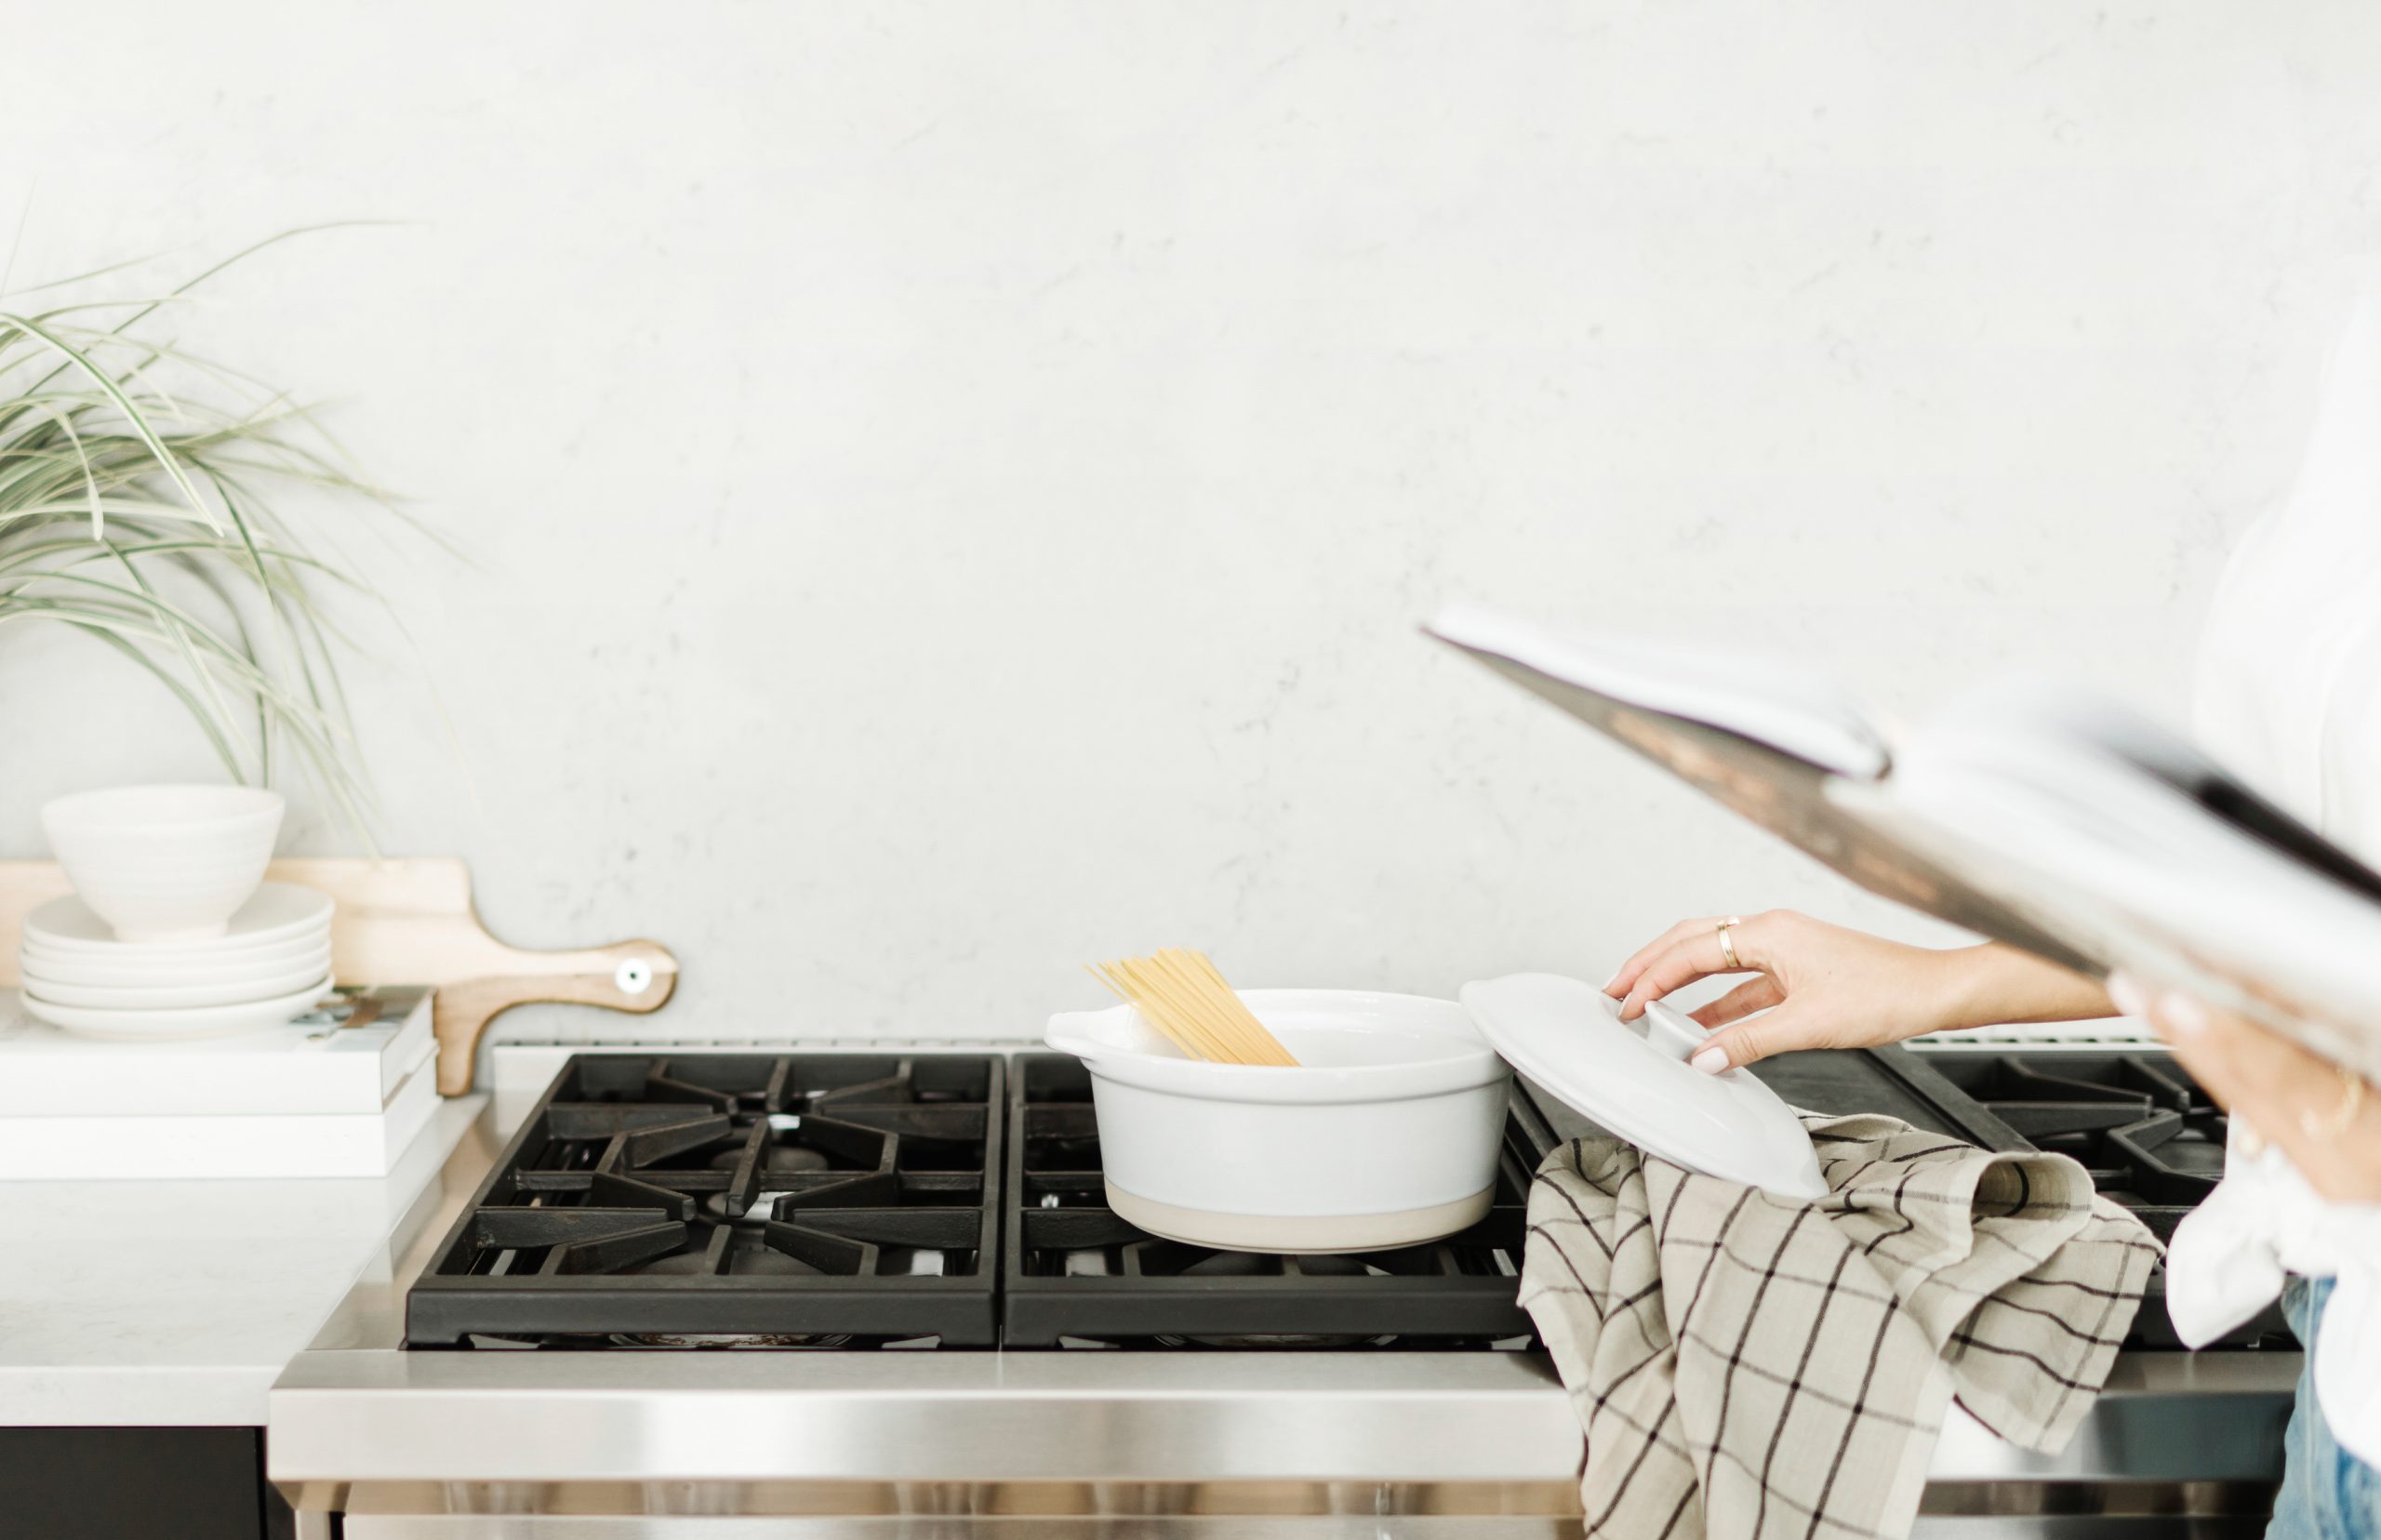 non descript woman cooking a cozy meal of pasta at a stove top